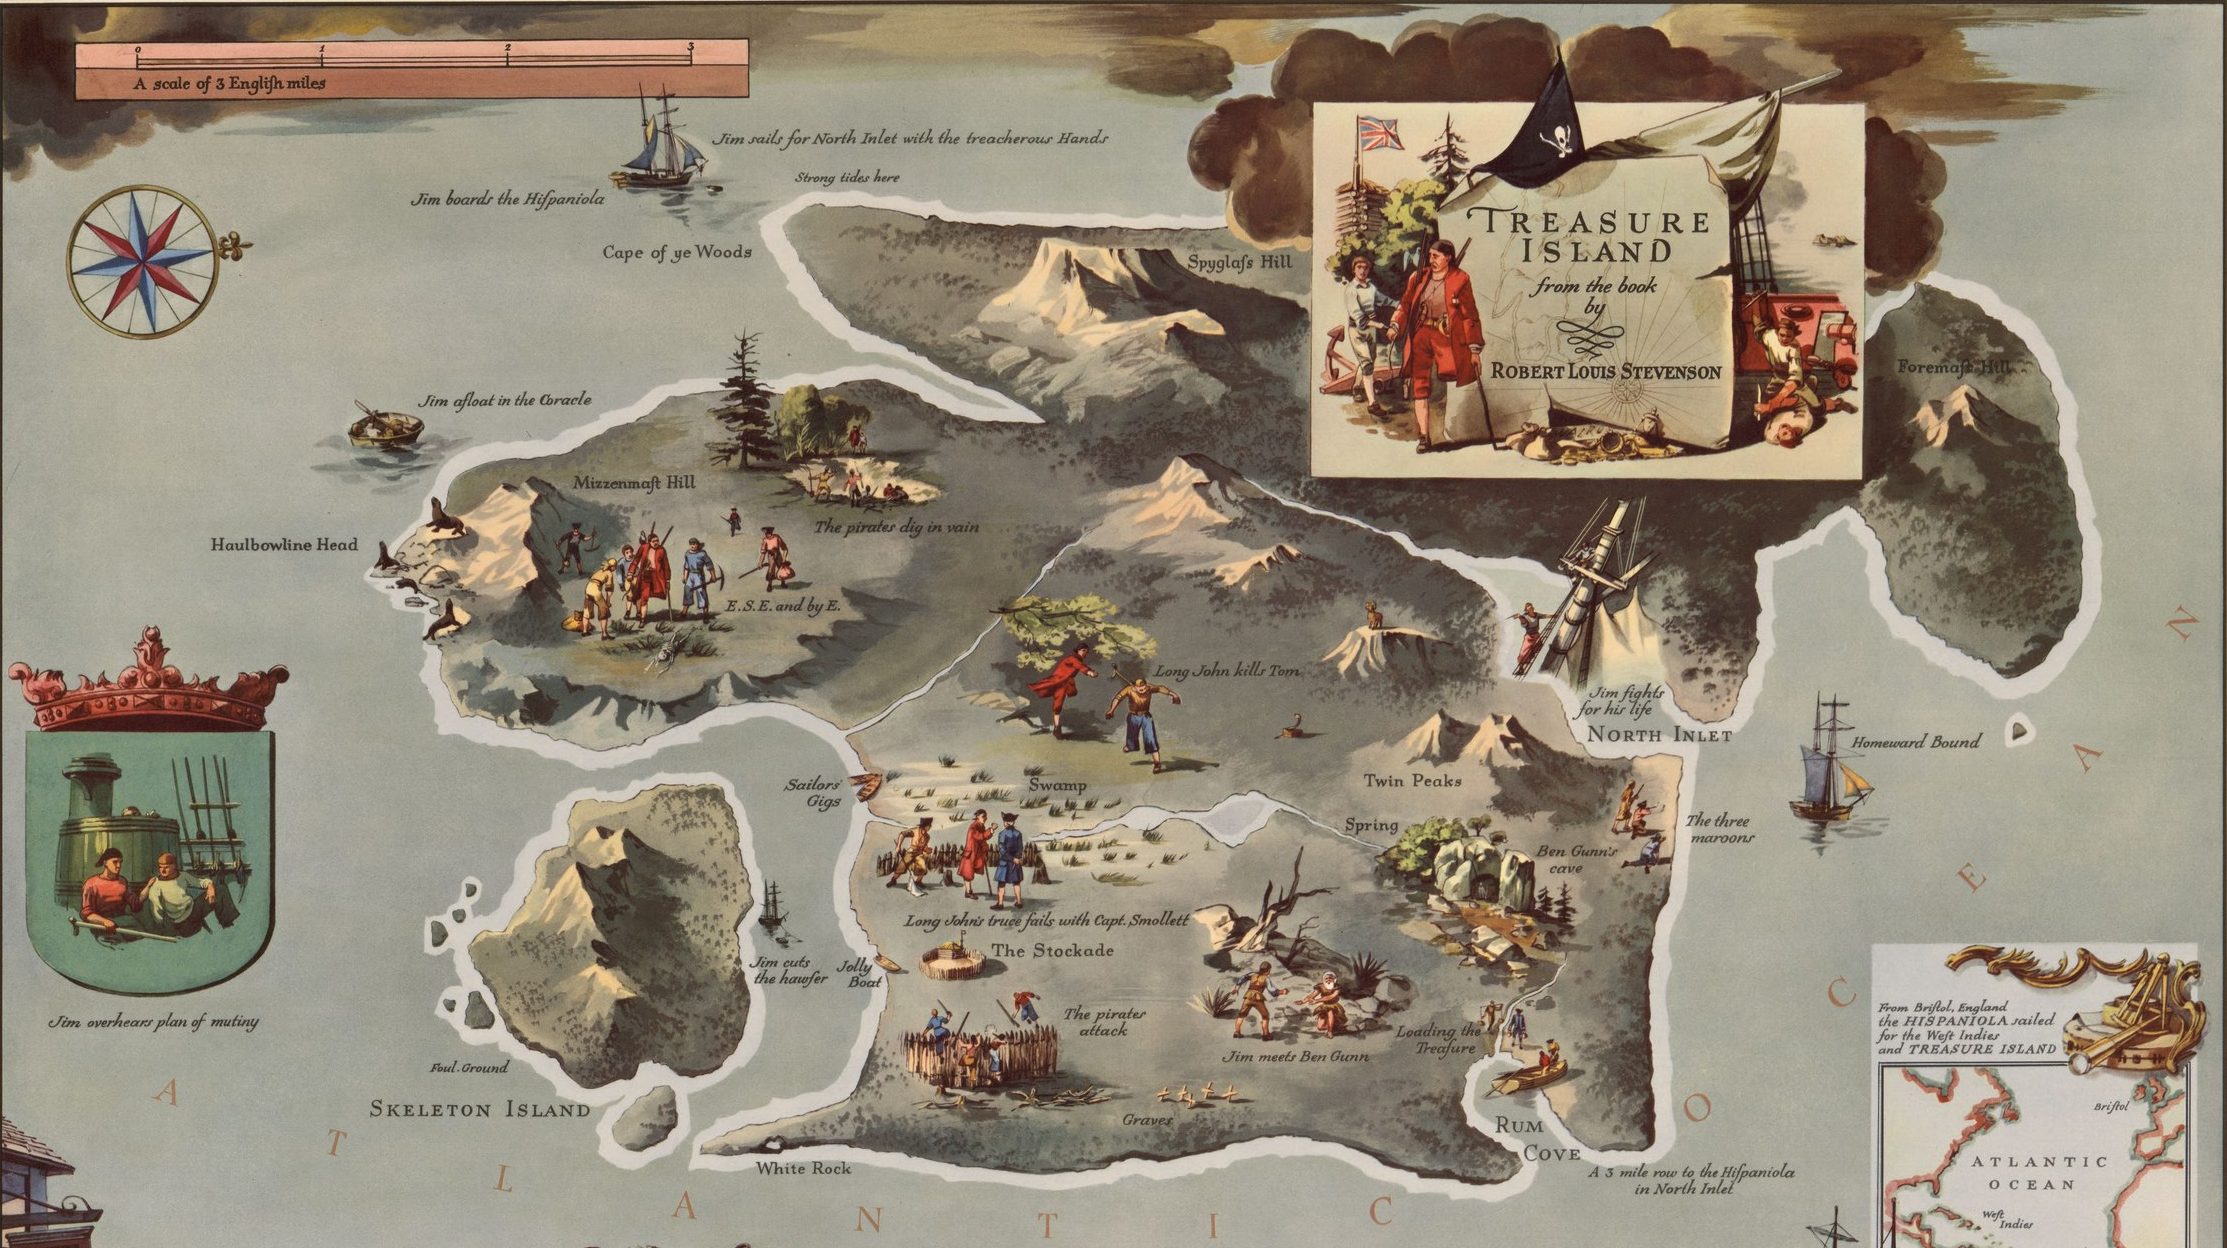 treasure island book map